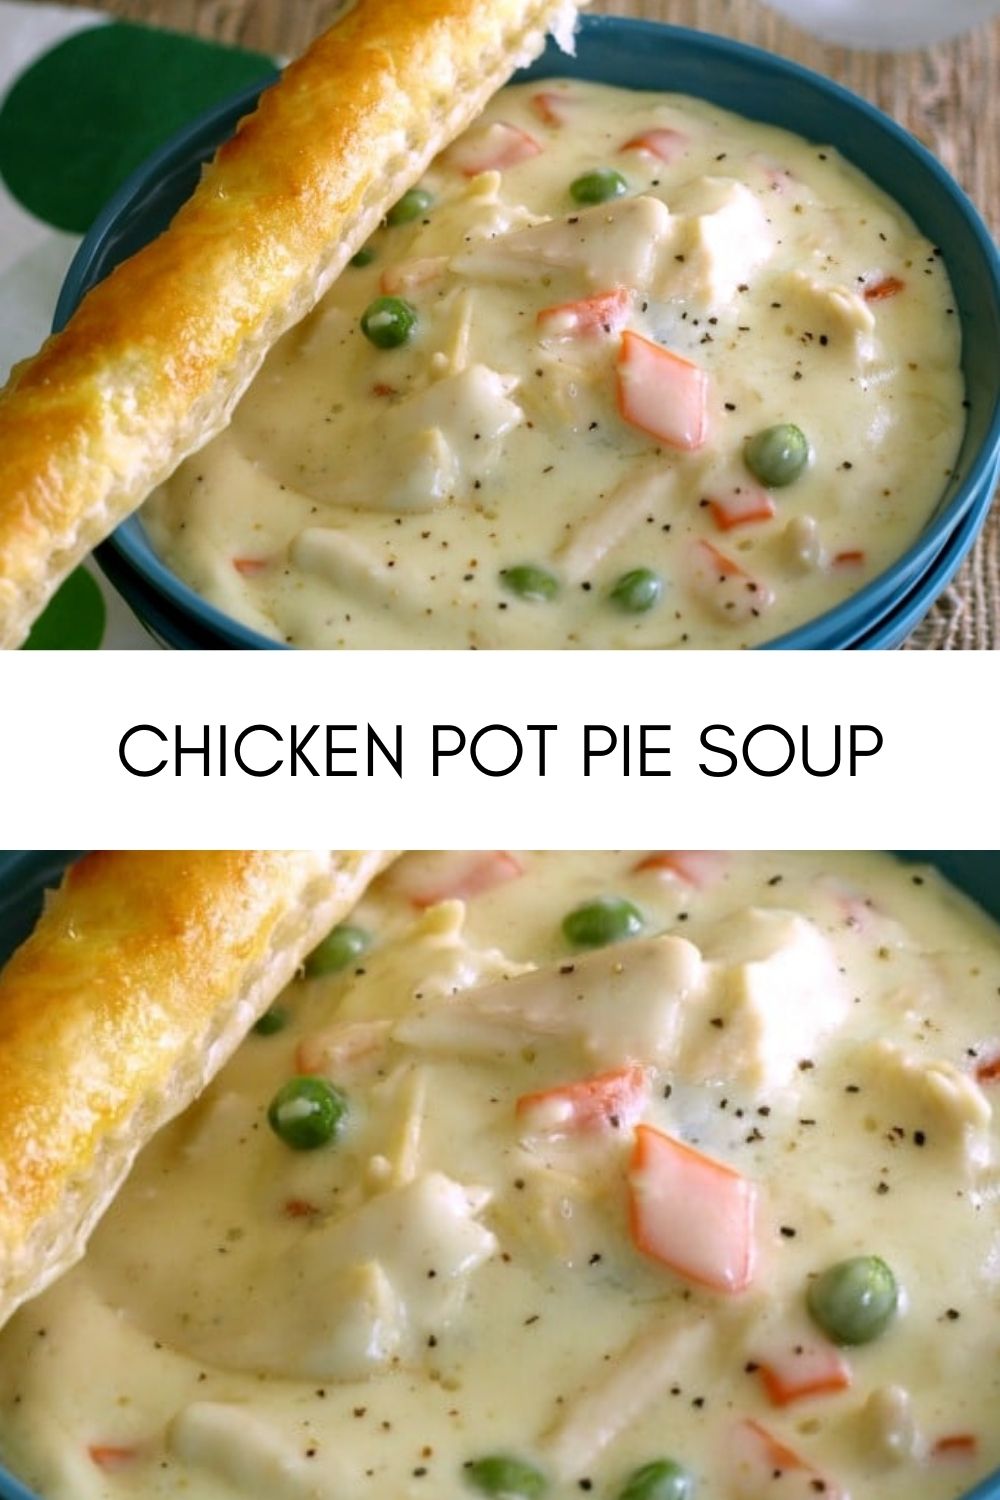 Chicken pot pie soup jason's deli